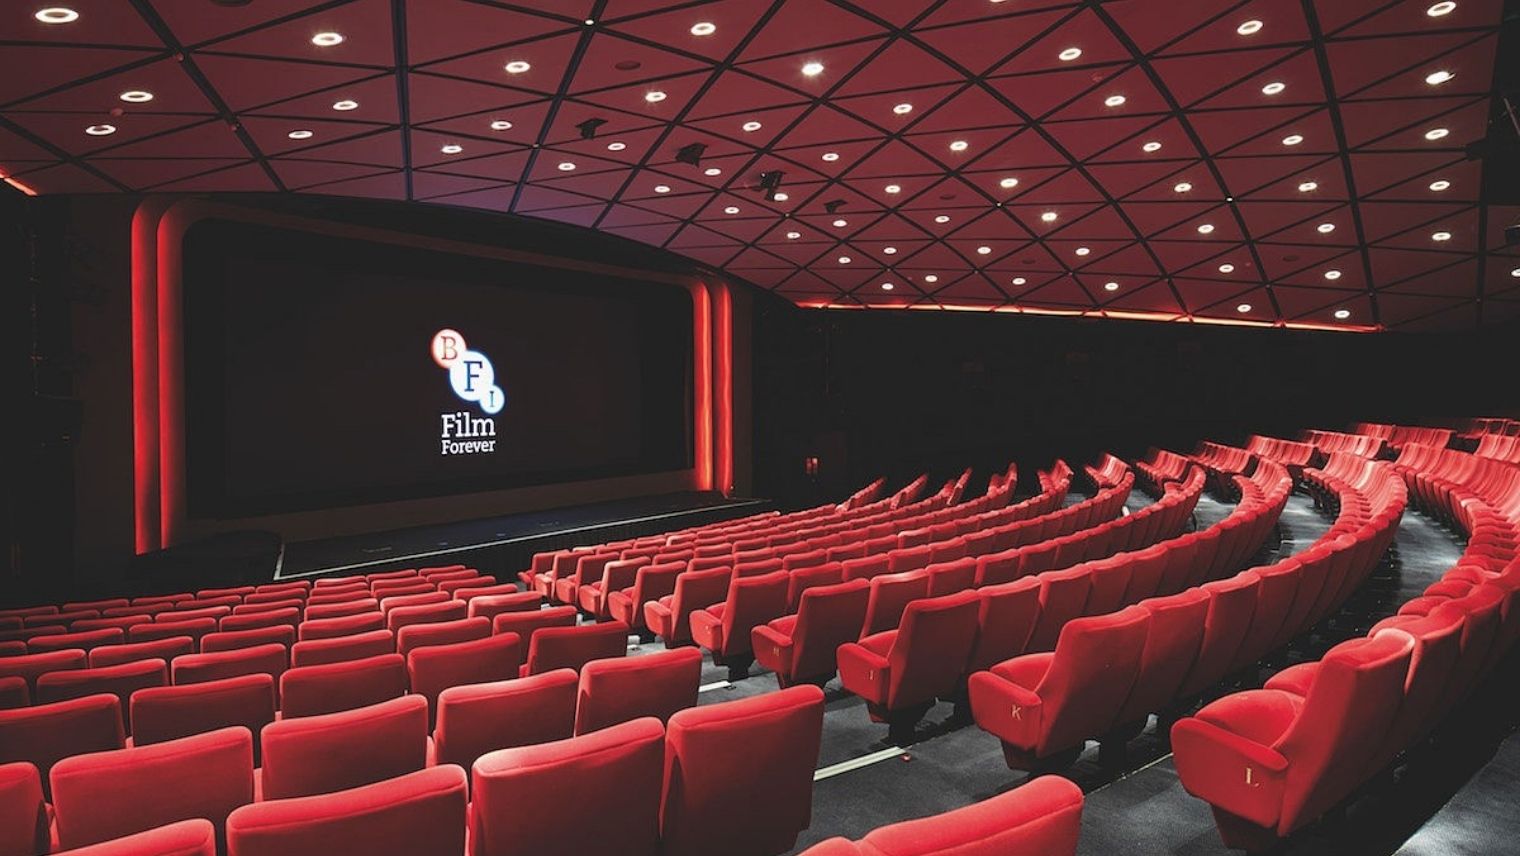 BFI Southbank's screening room